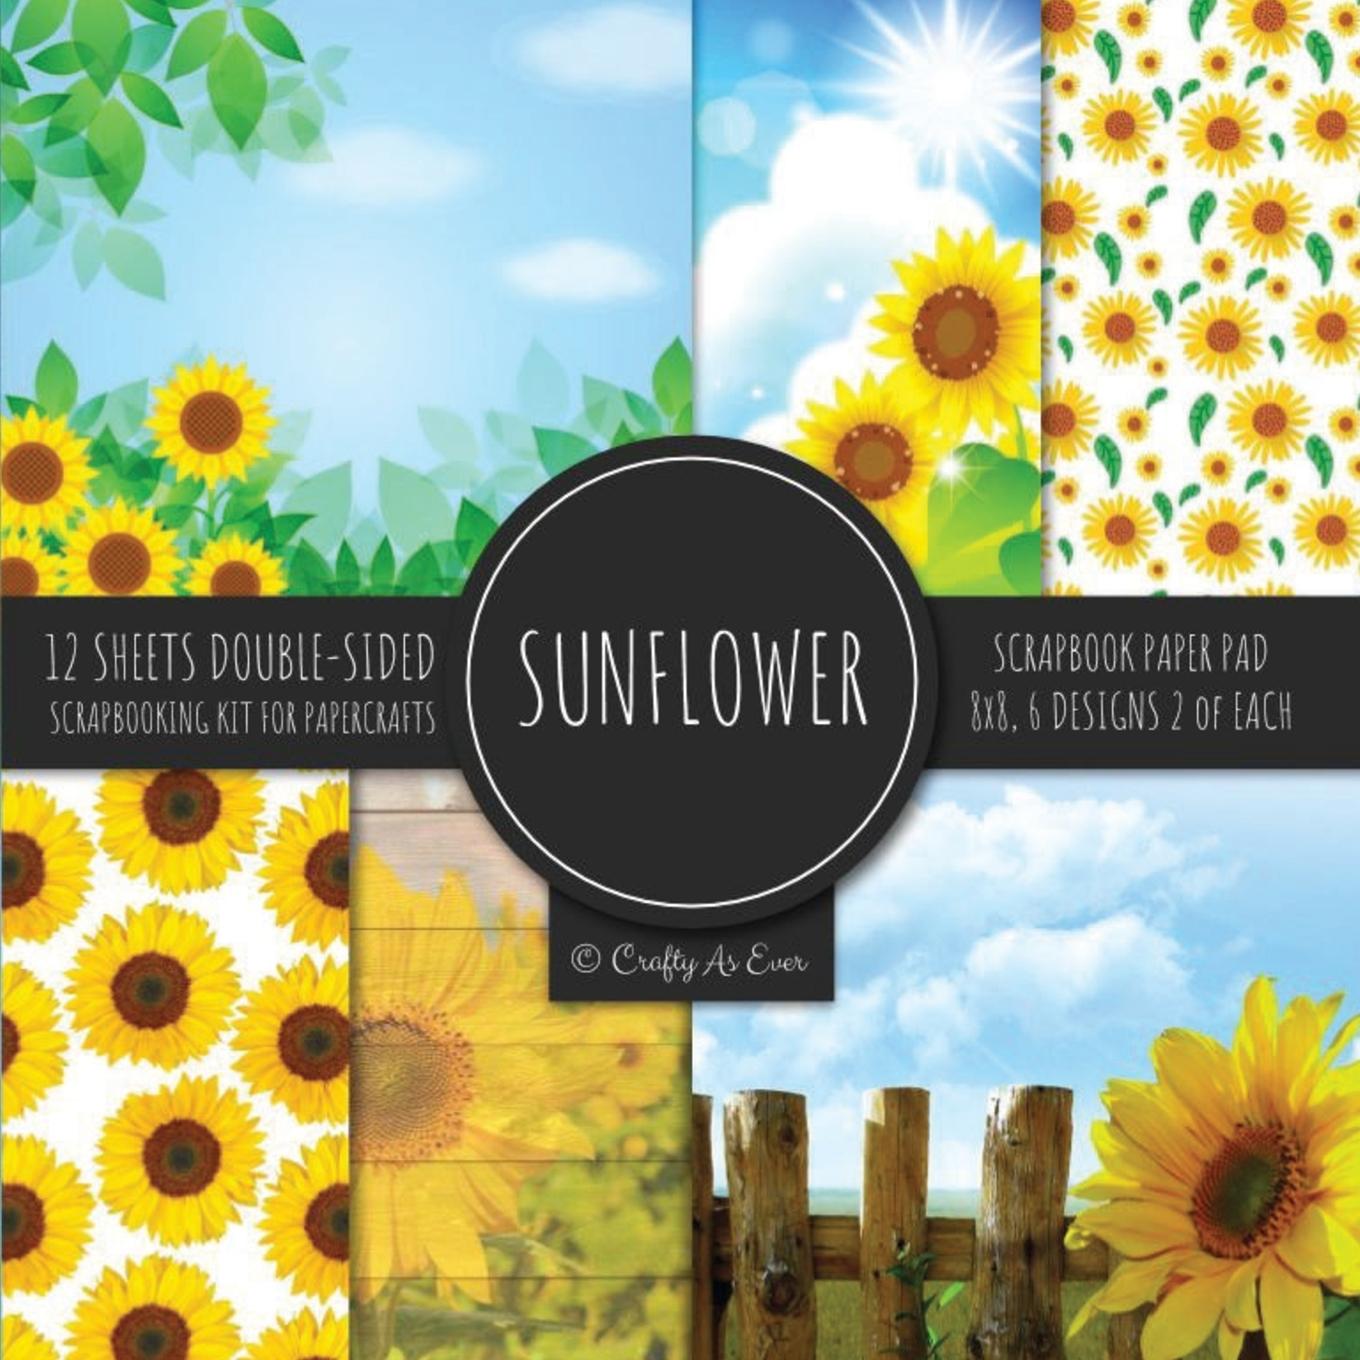 Kniha Sunflower Scrapbook Paper Pad 8x8 Scrapbooking Kit for Papercrafts, Cardmaking, Printmaking, DIY Crafts, Botanical Themed, Designs, Borders, Backgroun Crafty as Ever